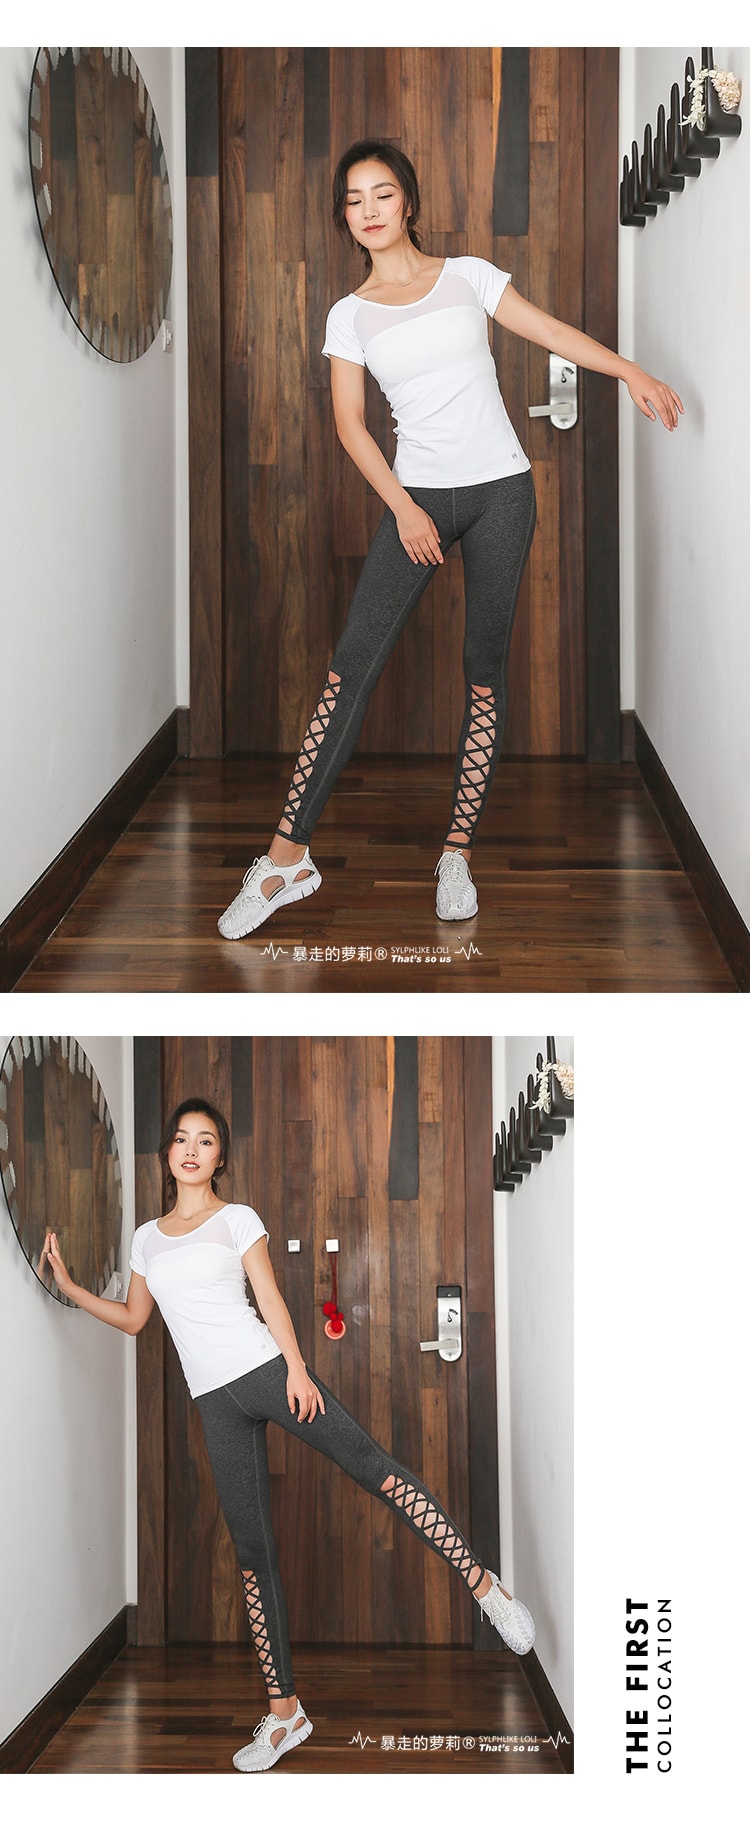  Sports Grid Elastic Pants For Yoga Fitness Train/Gray#/L